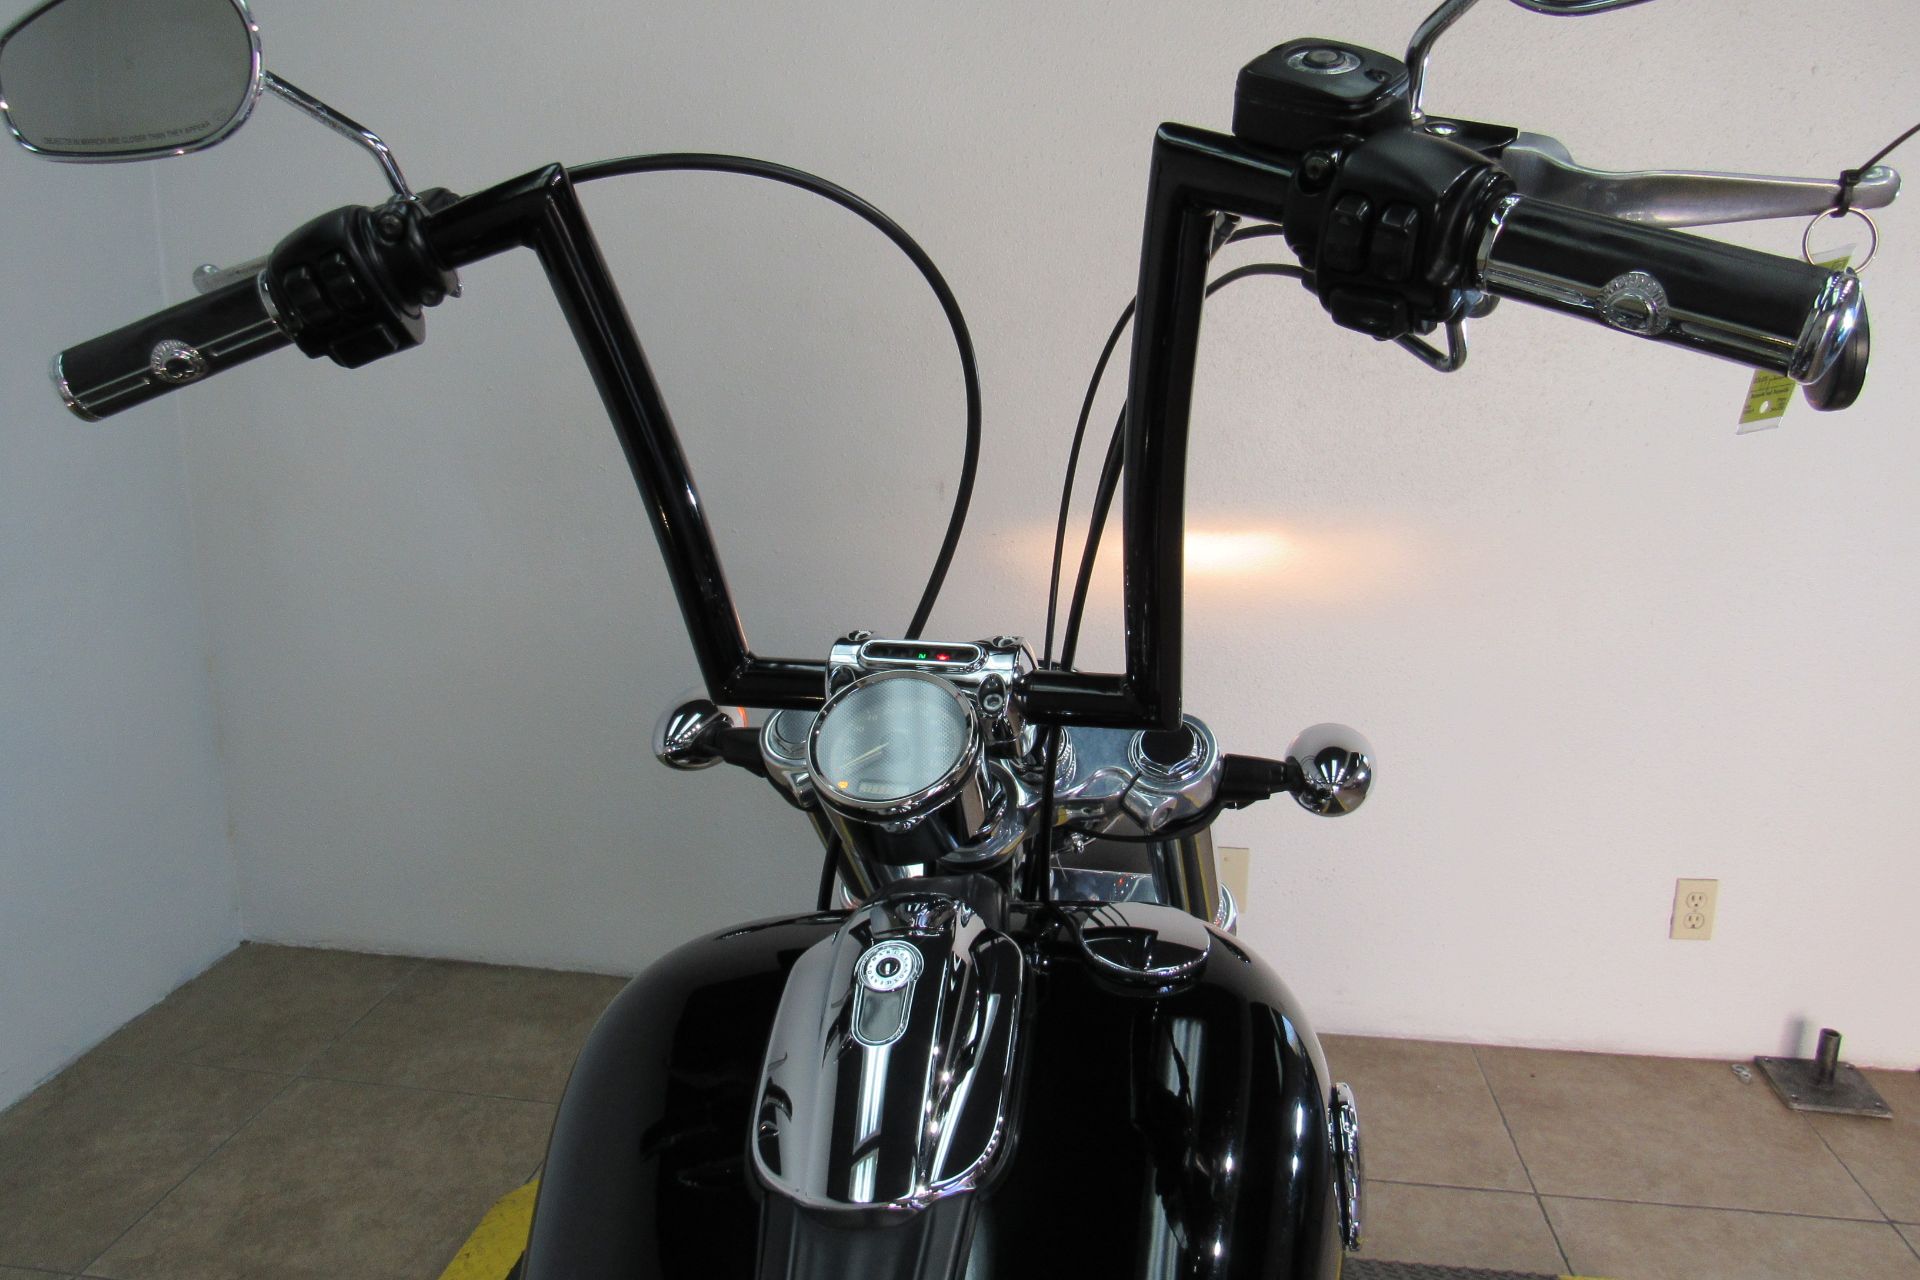 2014 Harley-Davidson Breakout® in Temecula, California - Photo 27